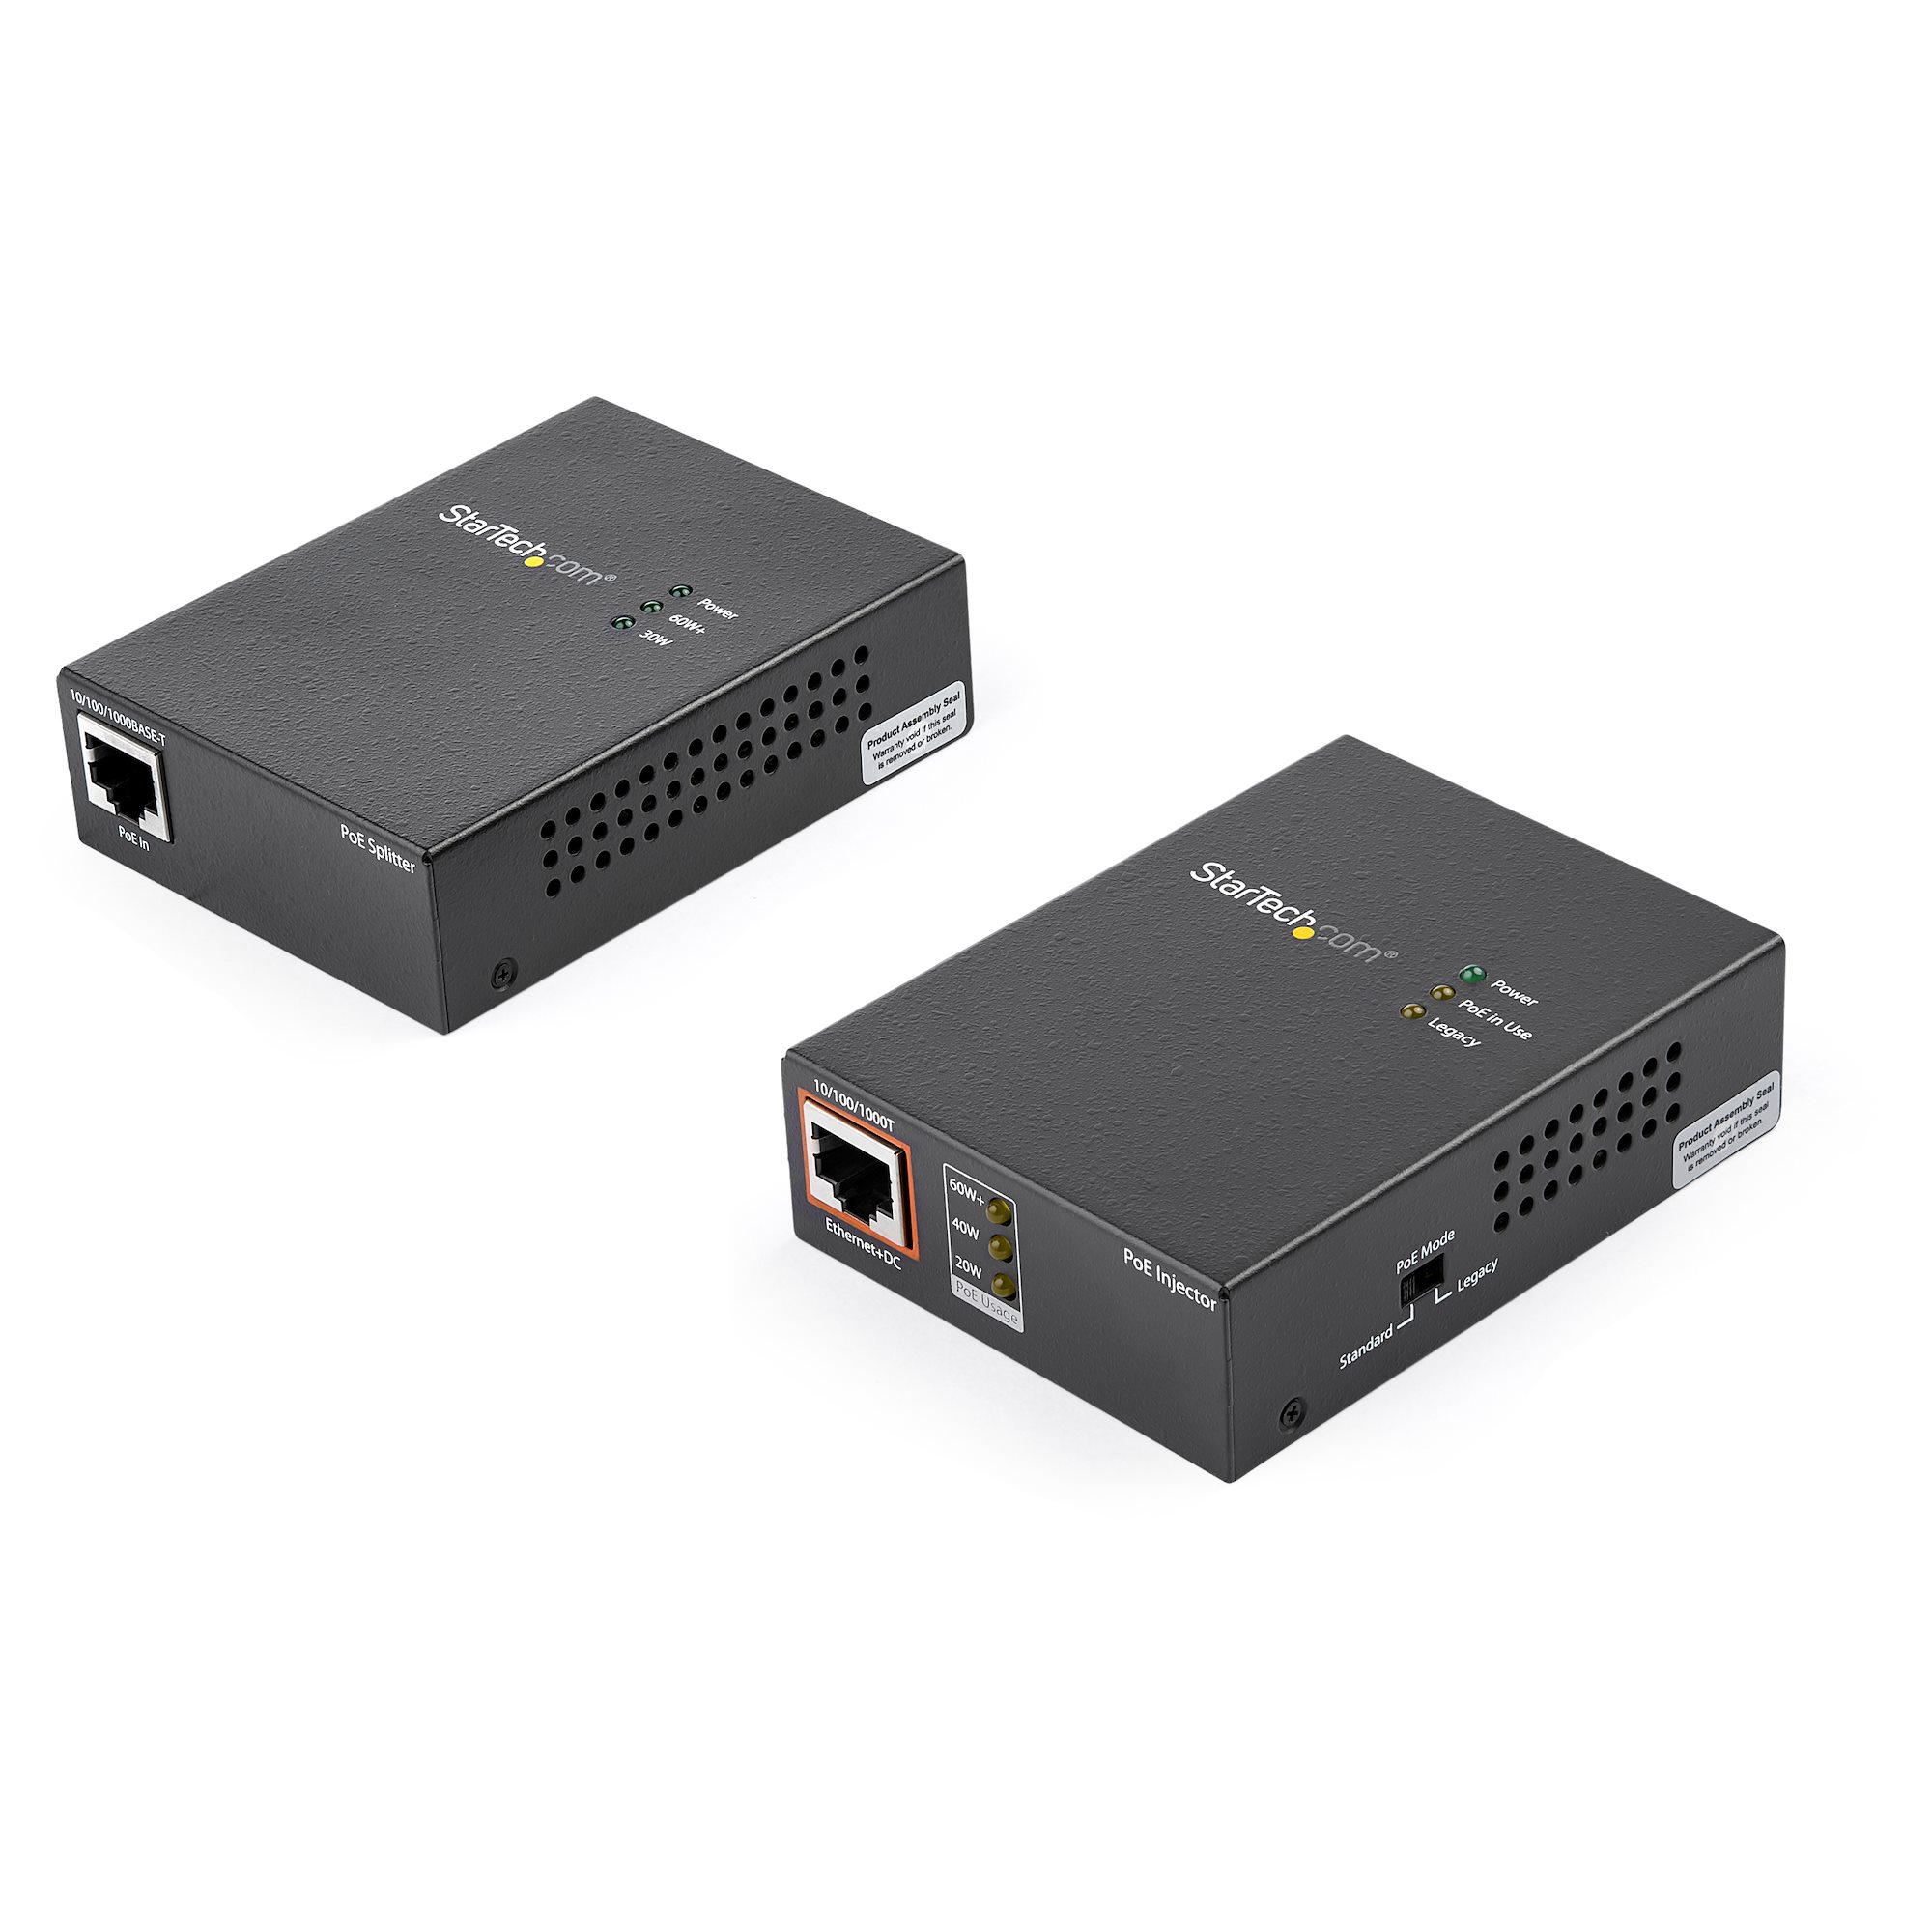 Poe 1 порт. POE 60w. POE инжектор 60w las60-57cn-rj45. POE сплиттер. Медиа конвертер HDMI Ethernet.